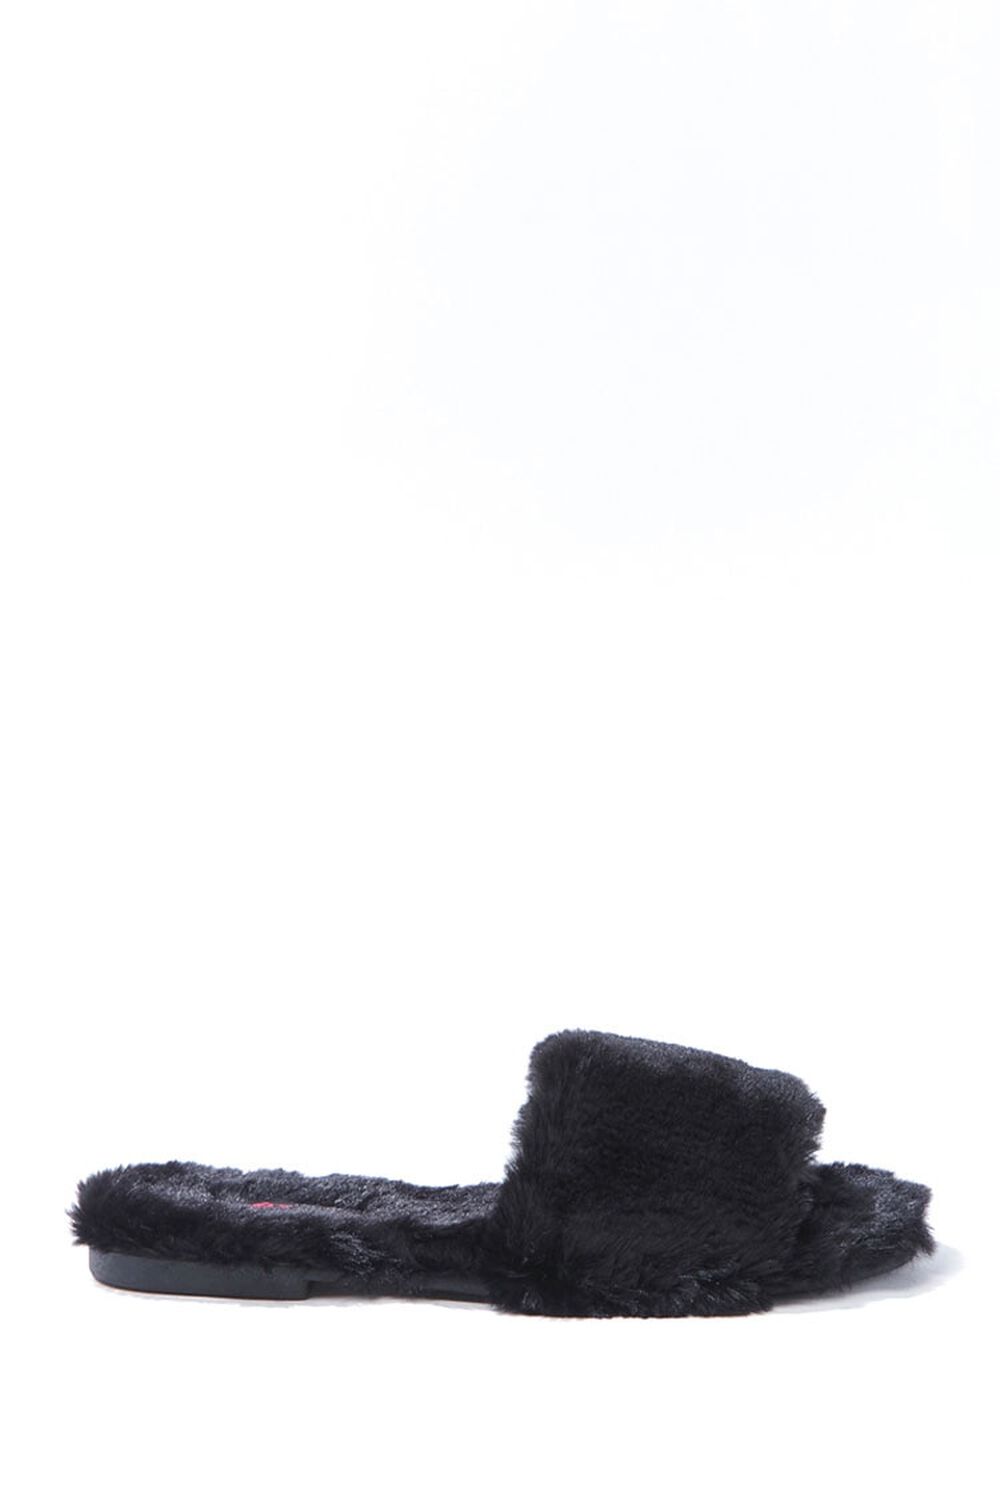 BLACK Faux Fur Slippers, image 1